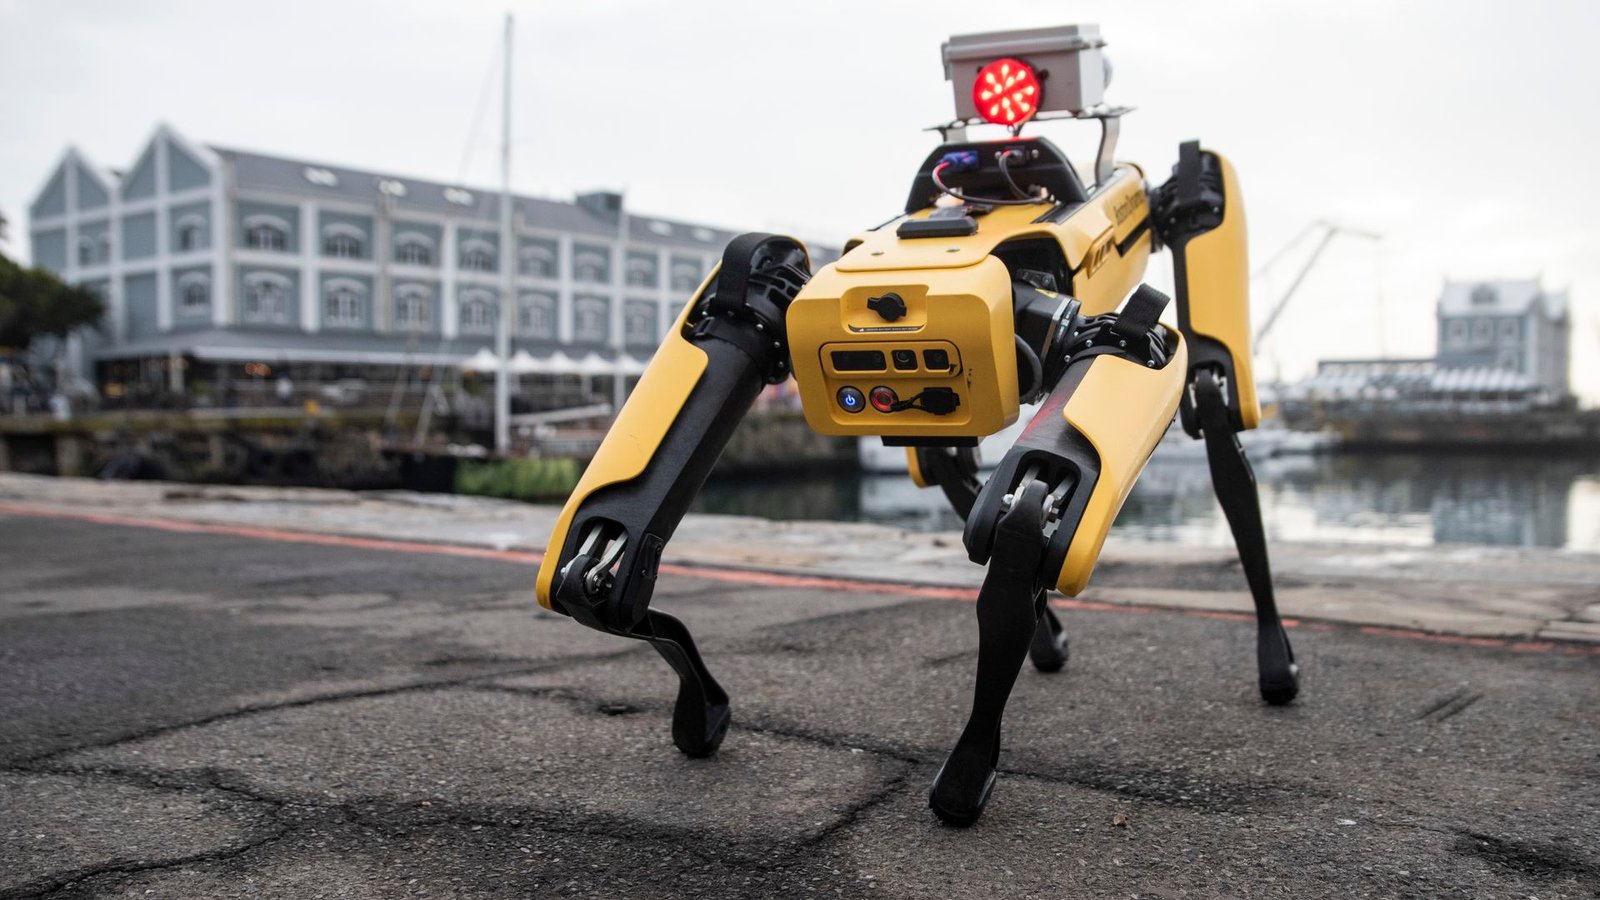 Exclusive: Boston Dynamics pledges not to weaponize its robots